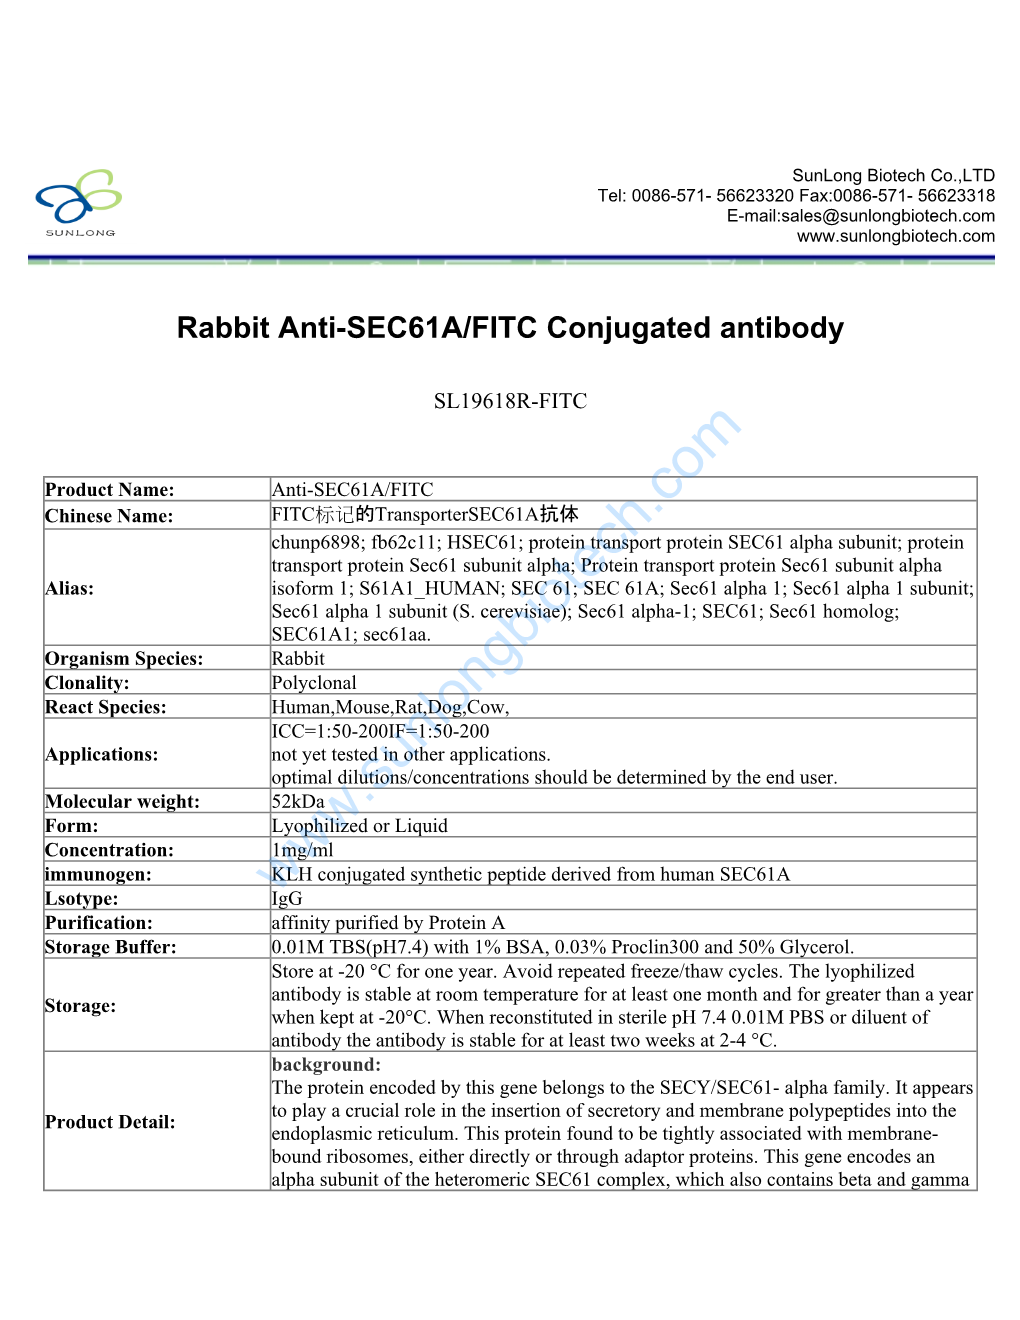 Rabbit Anti-SEC61A/FITC Conjugated Antibody